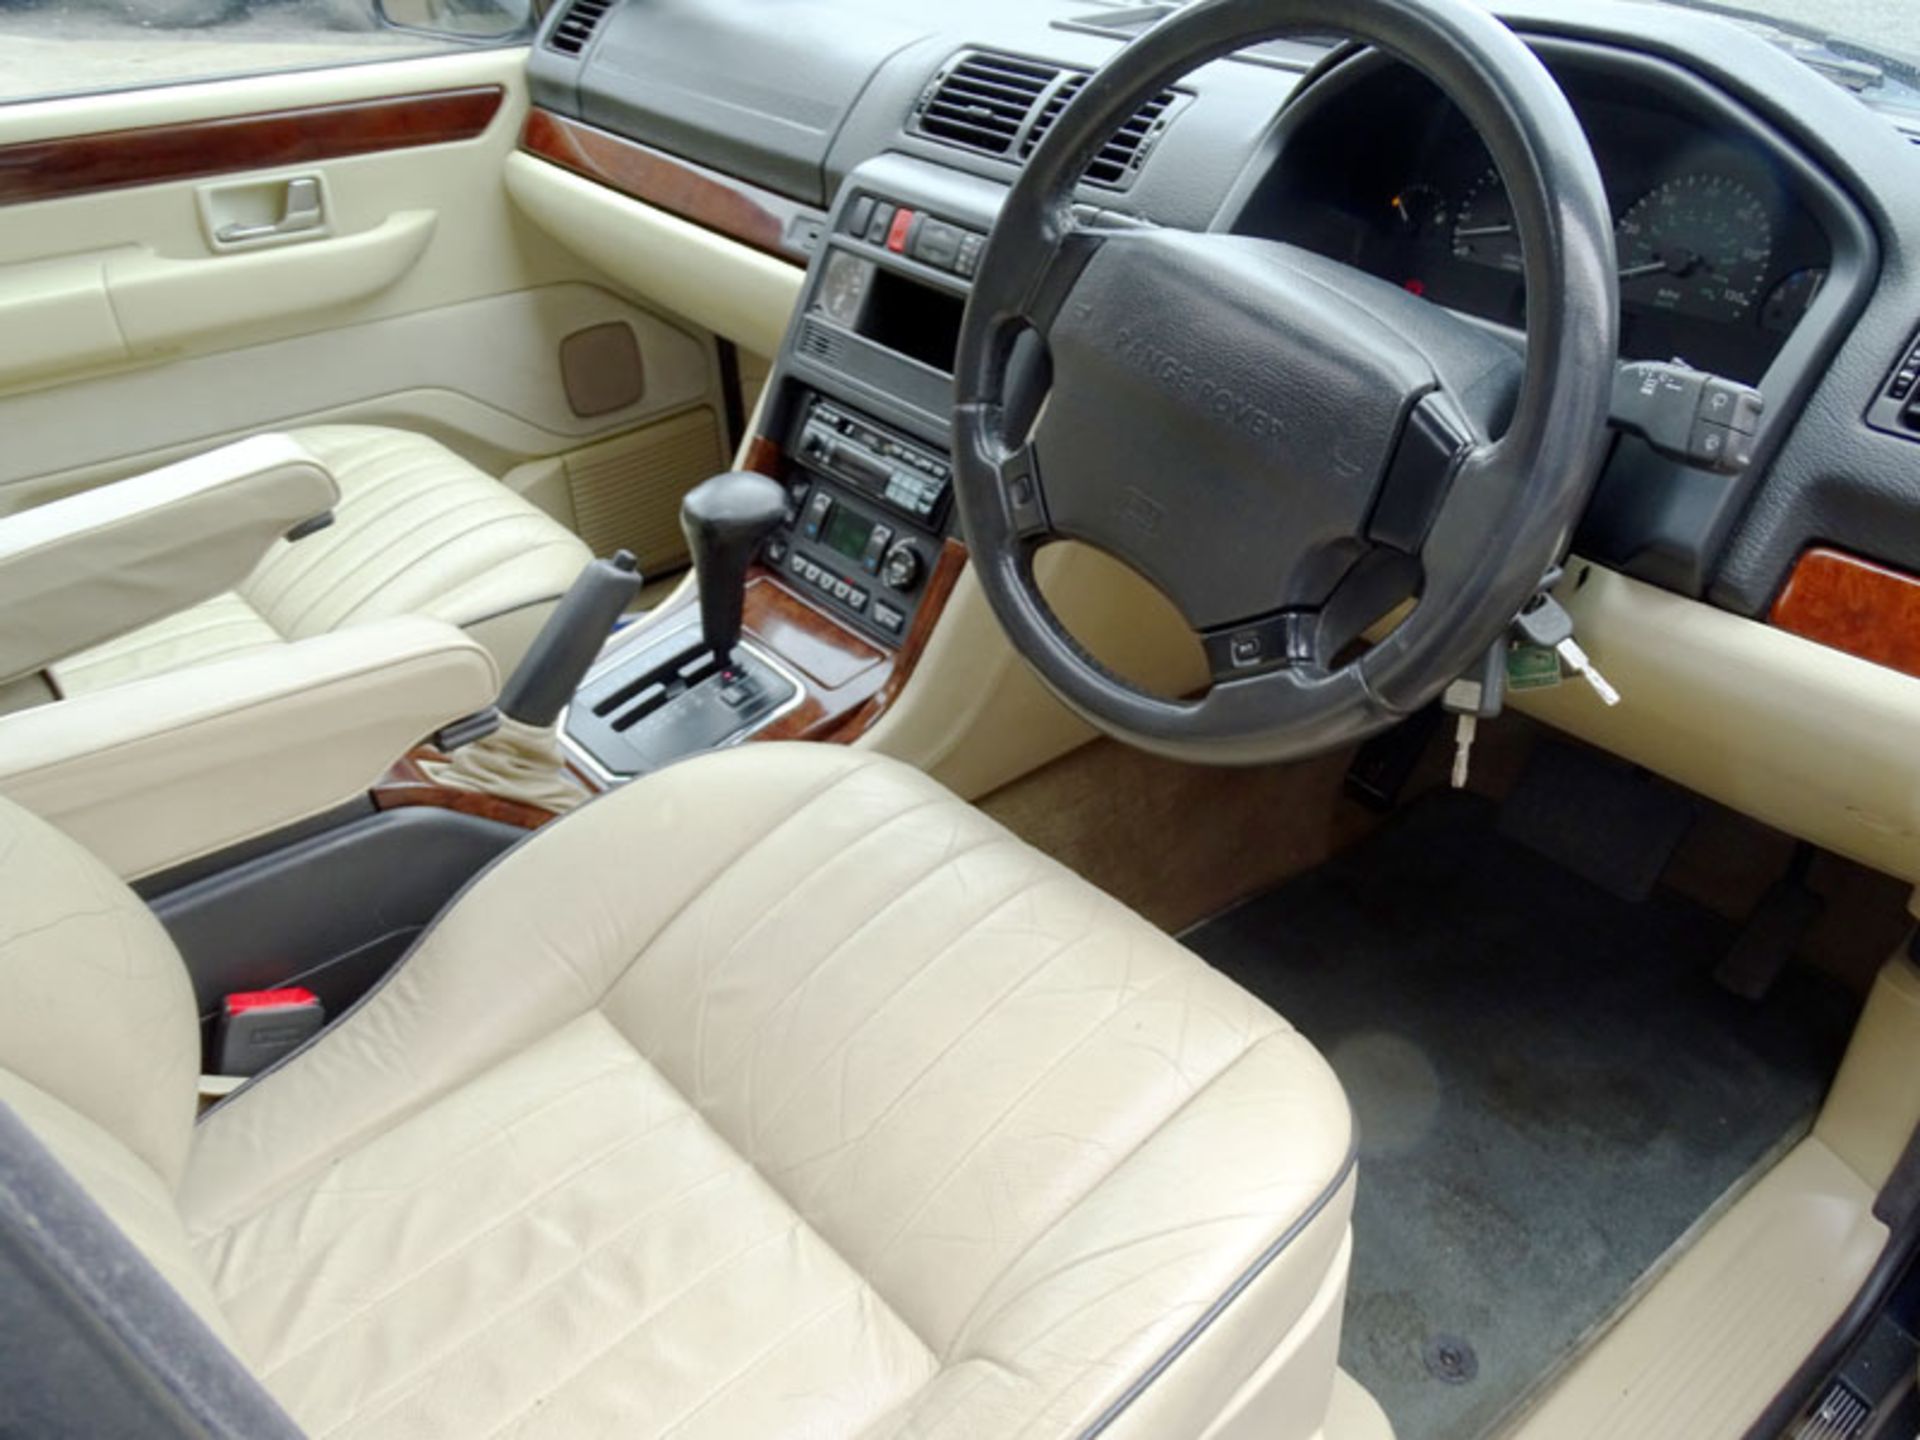 1998 Range Rover 4.0 SE - Image 3 of 4